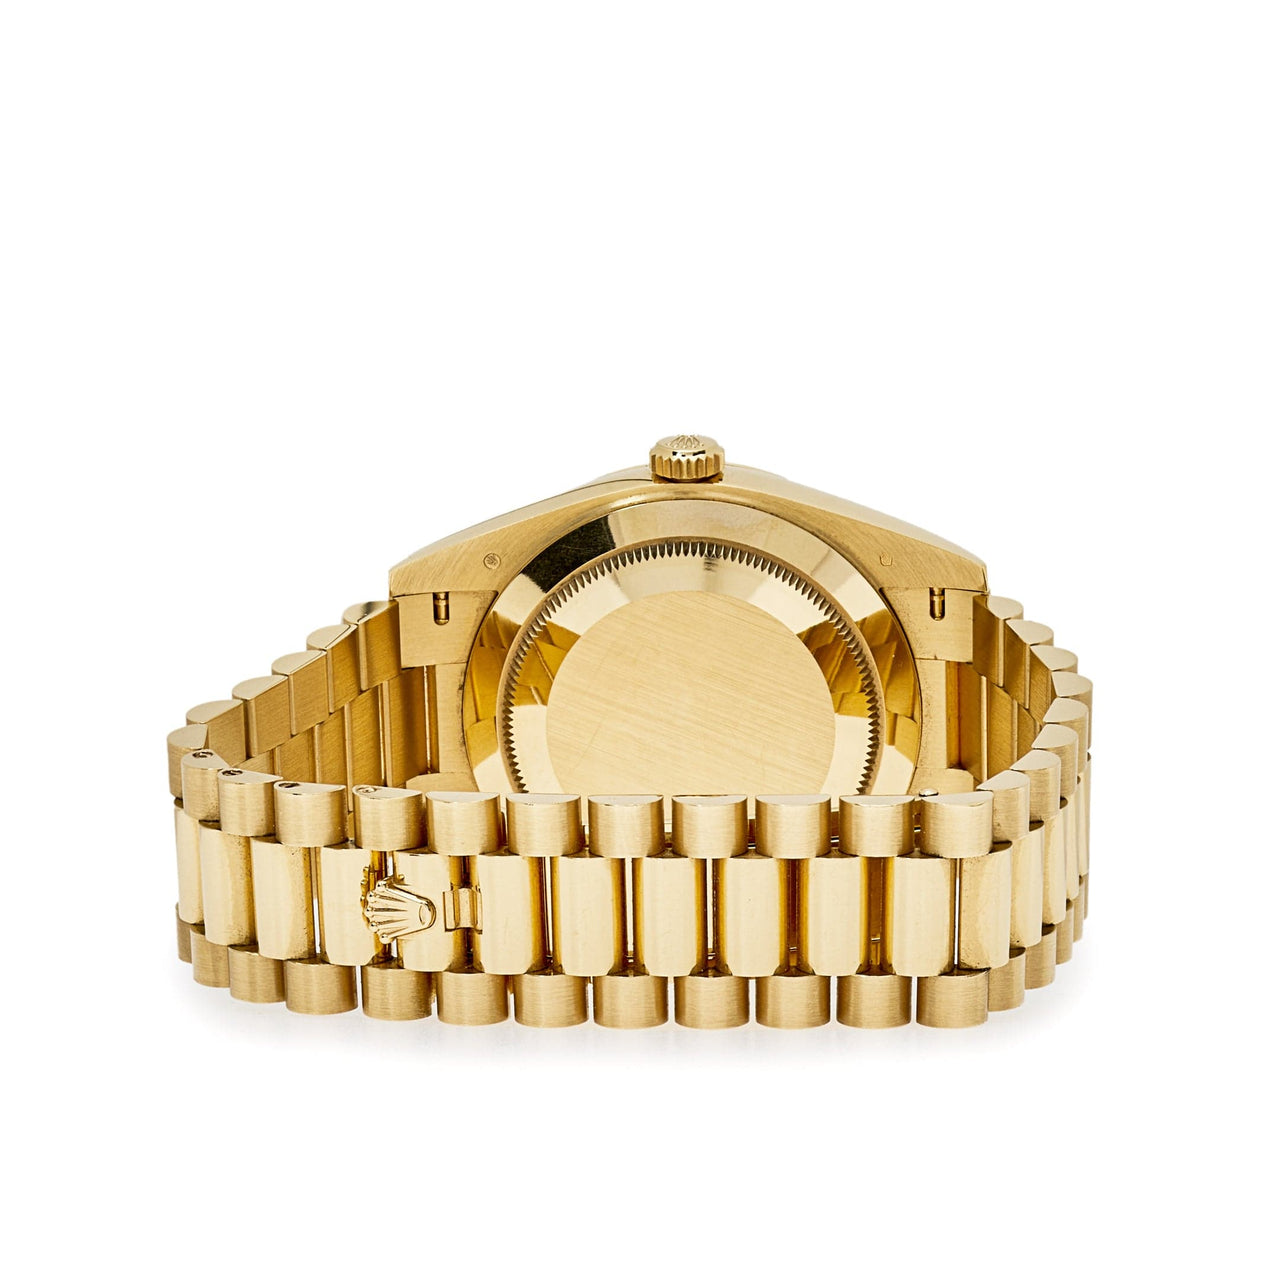 Luxury Watch Rolex Day-Date 40 Yellow Gold Champagne Roman Dial 228238 Wrist Aficionado